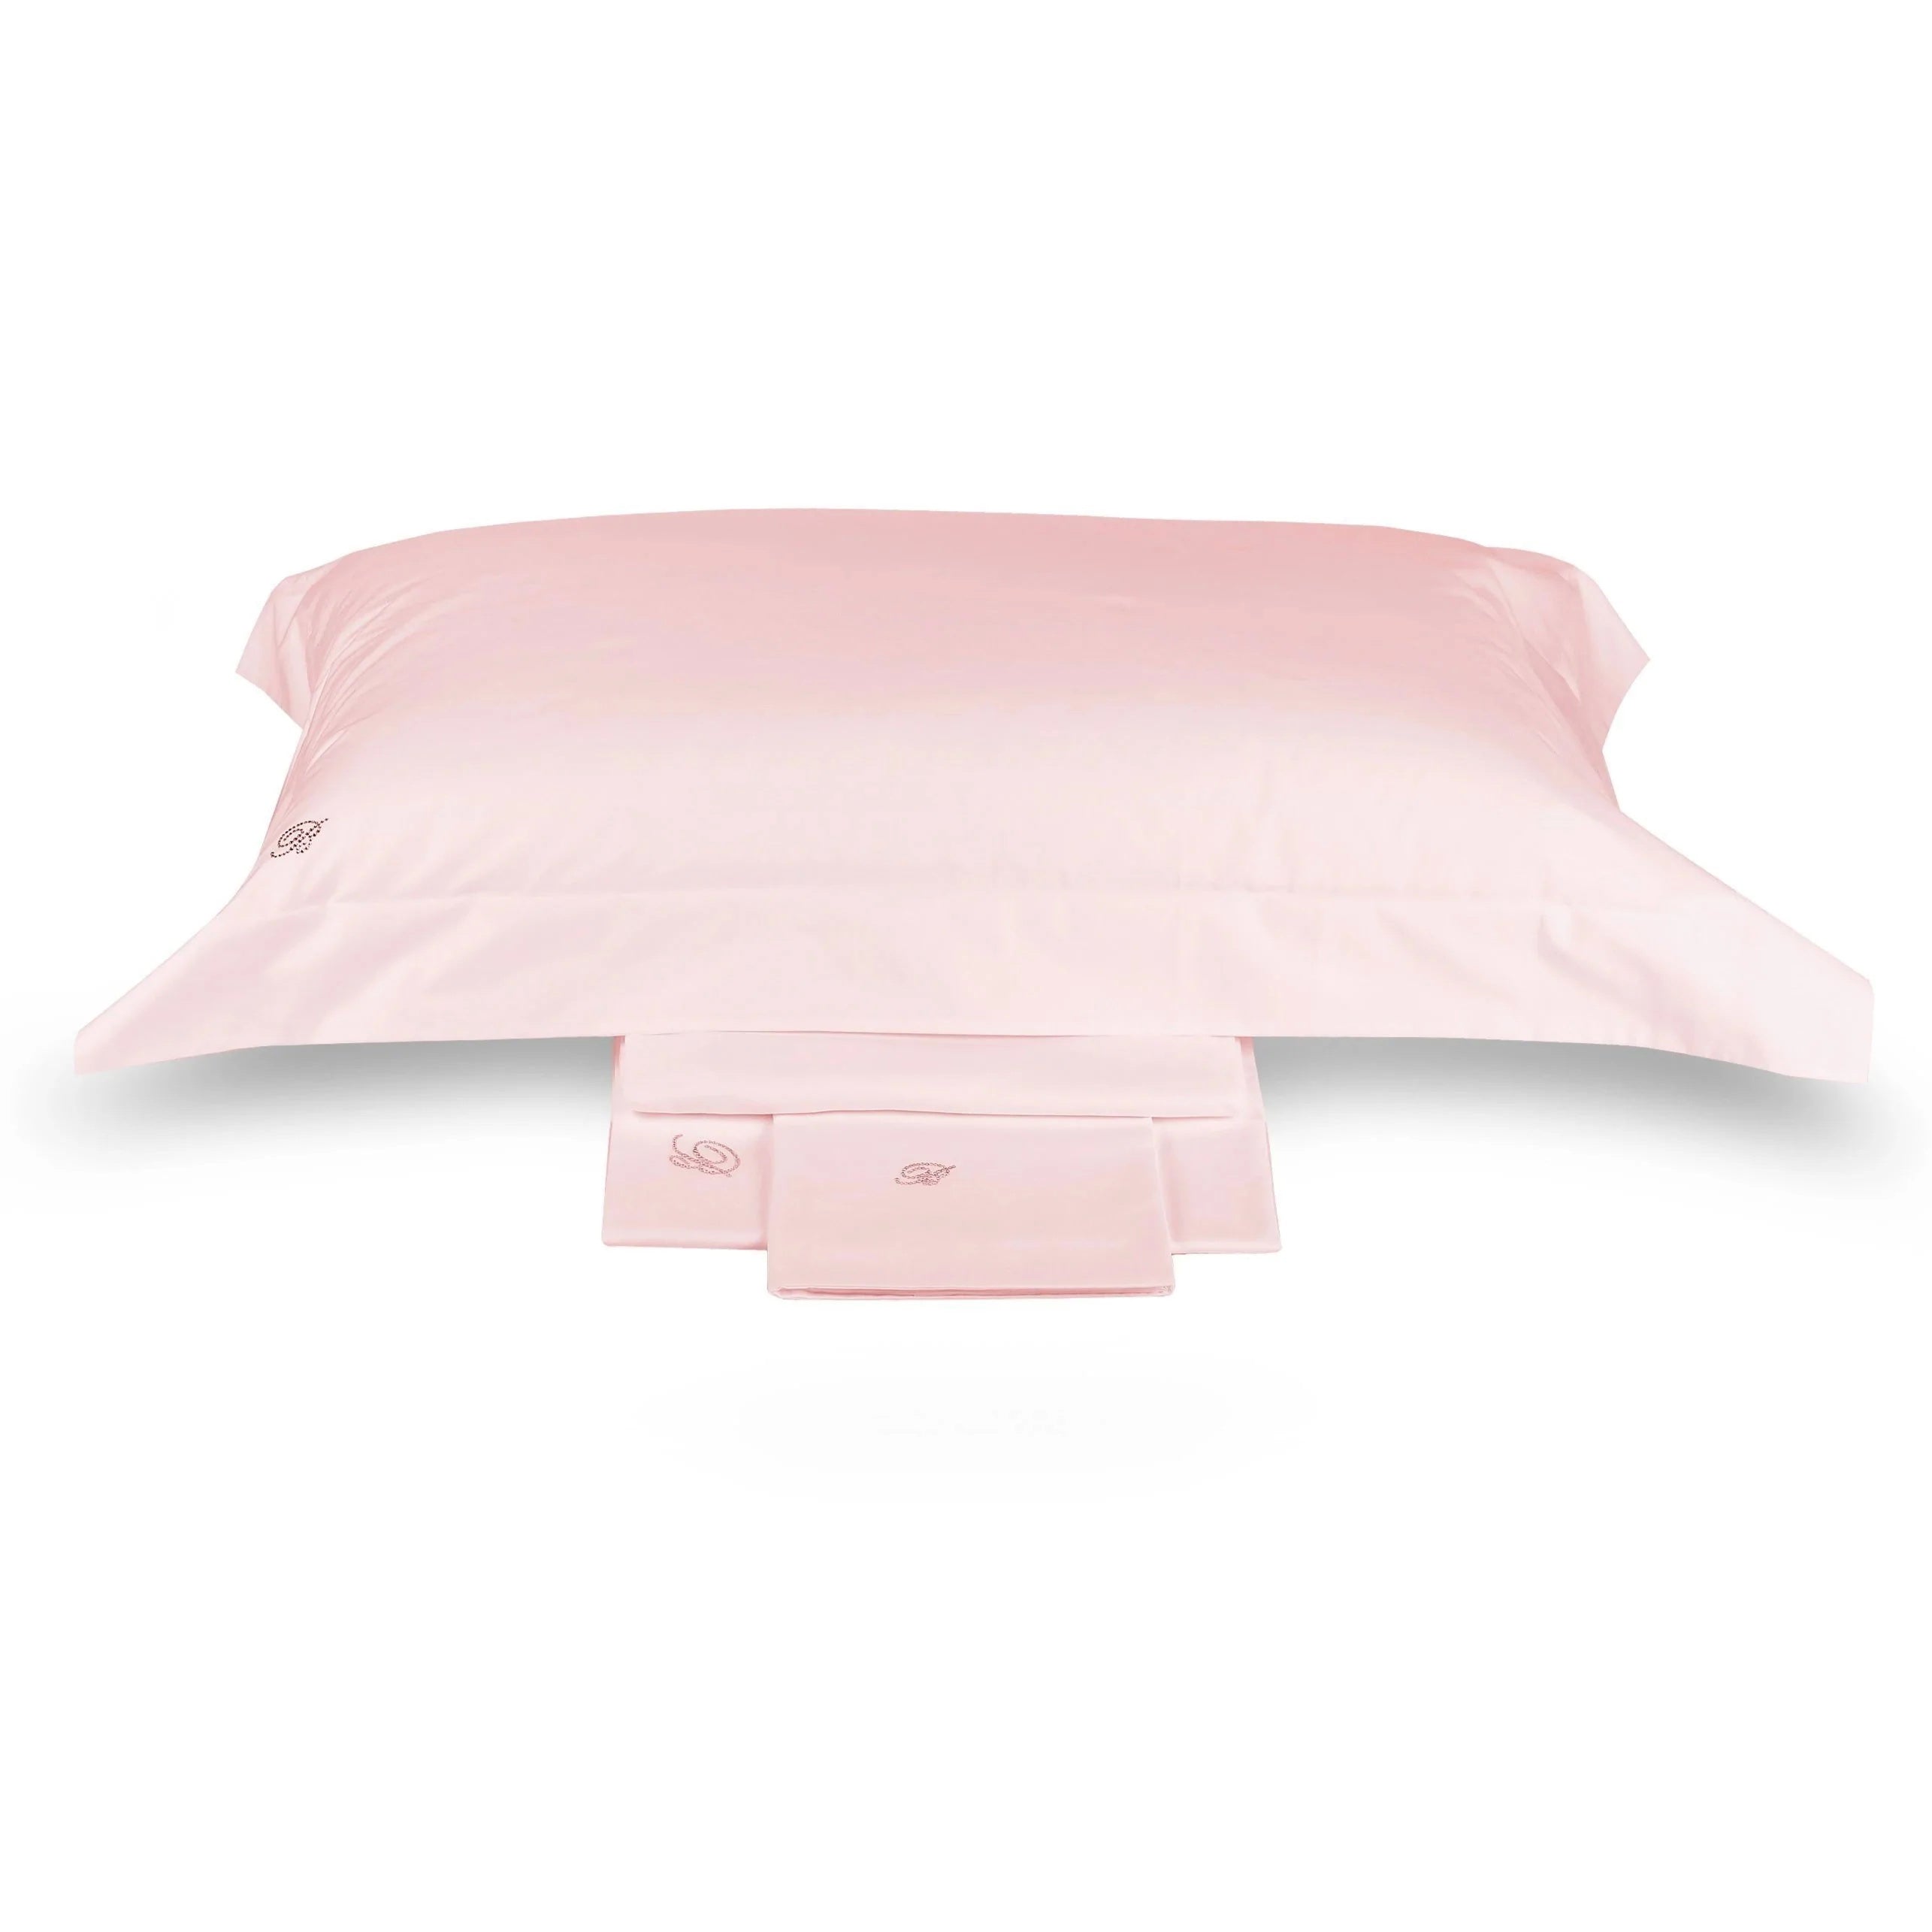 Single bed linen set Blu Valentina Blumarine